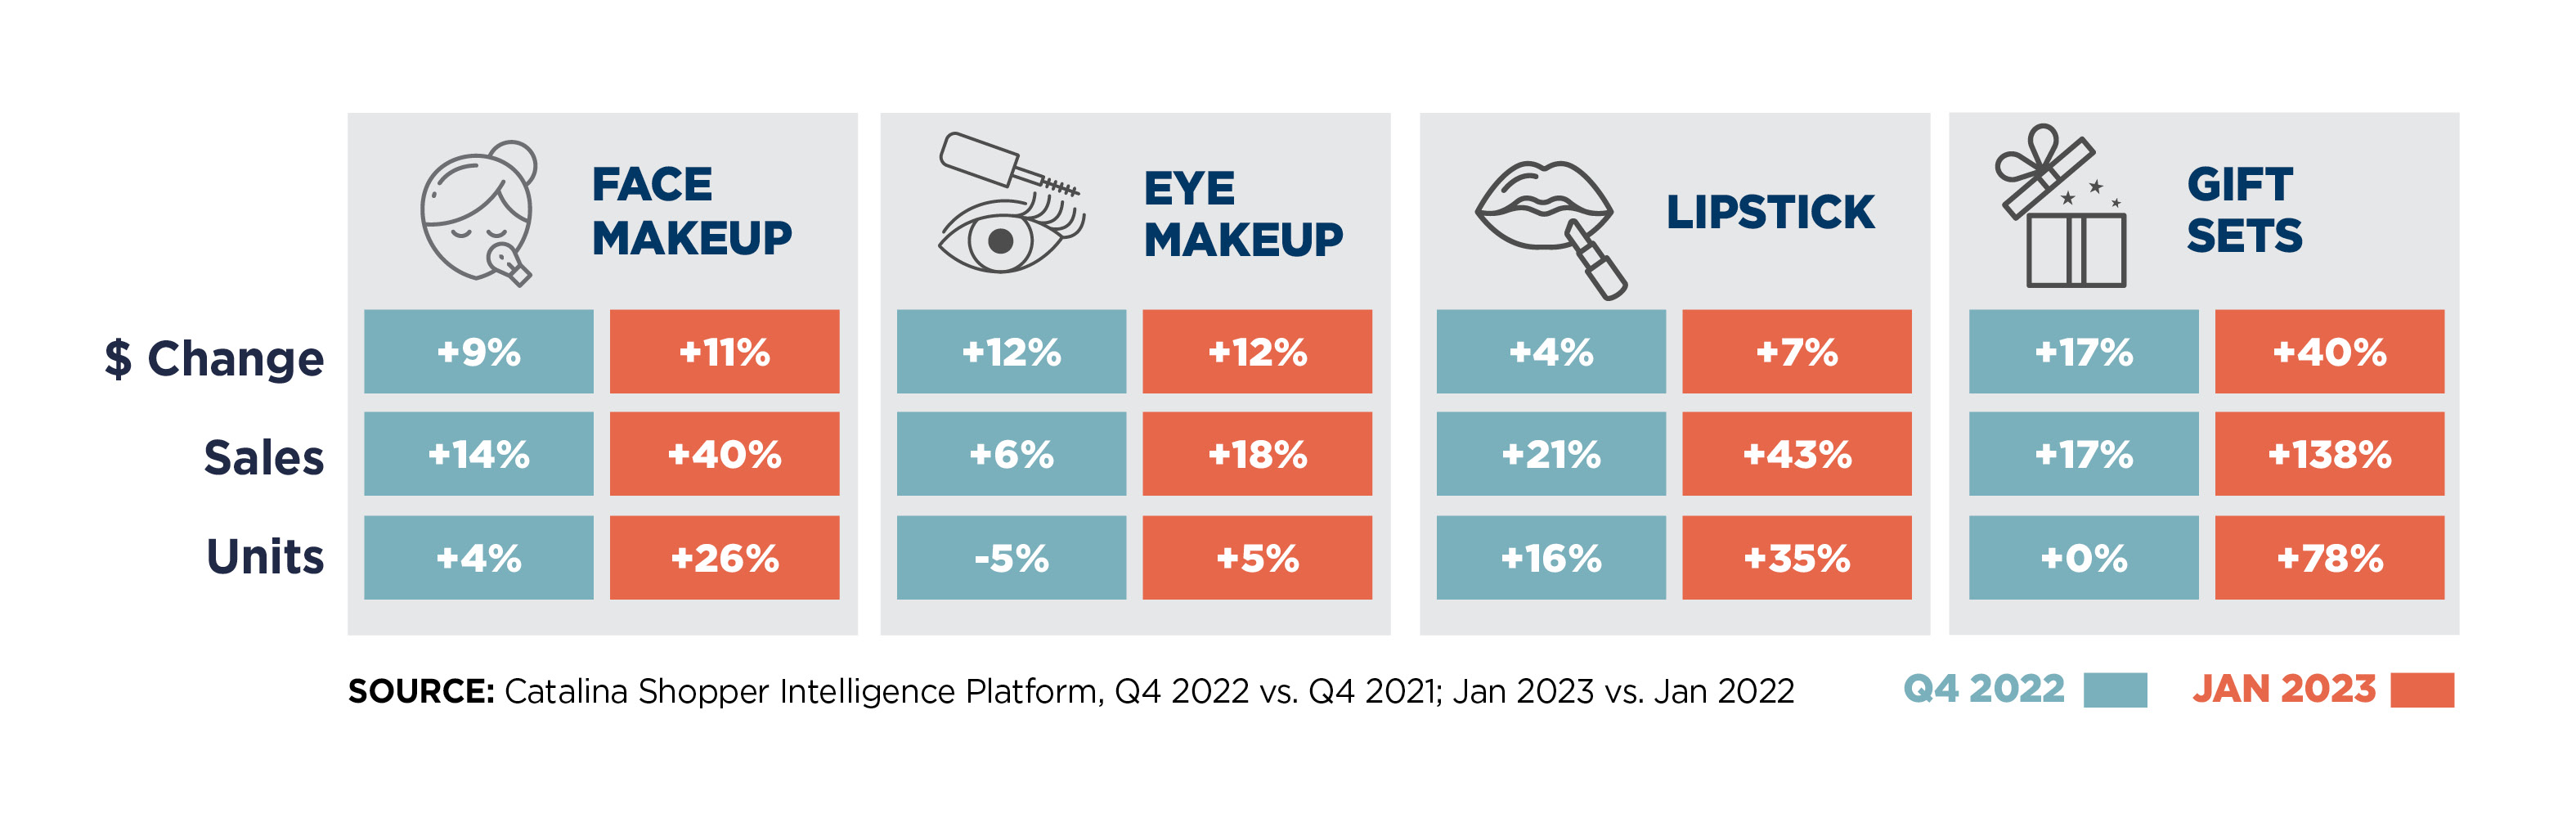 Cosmetics Sales Trends 2023